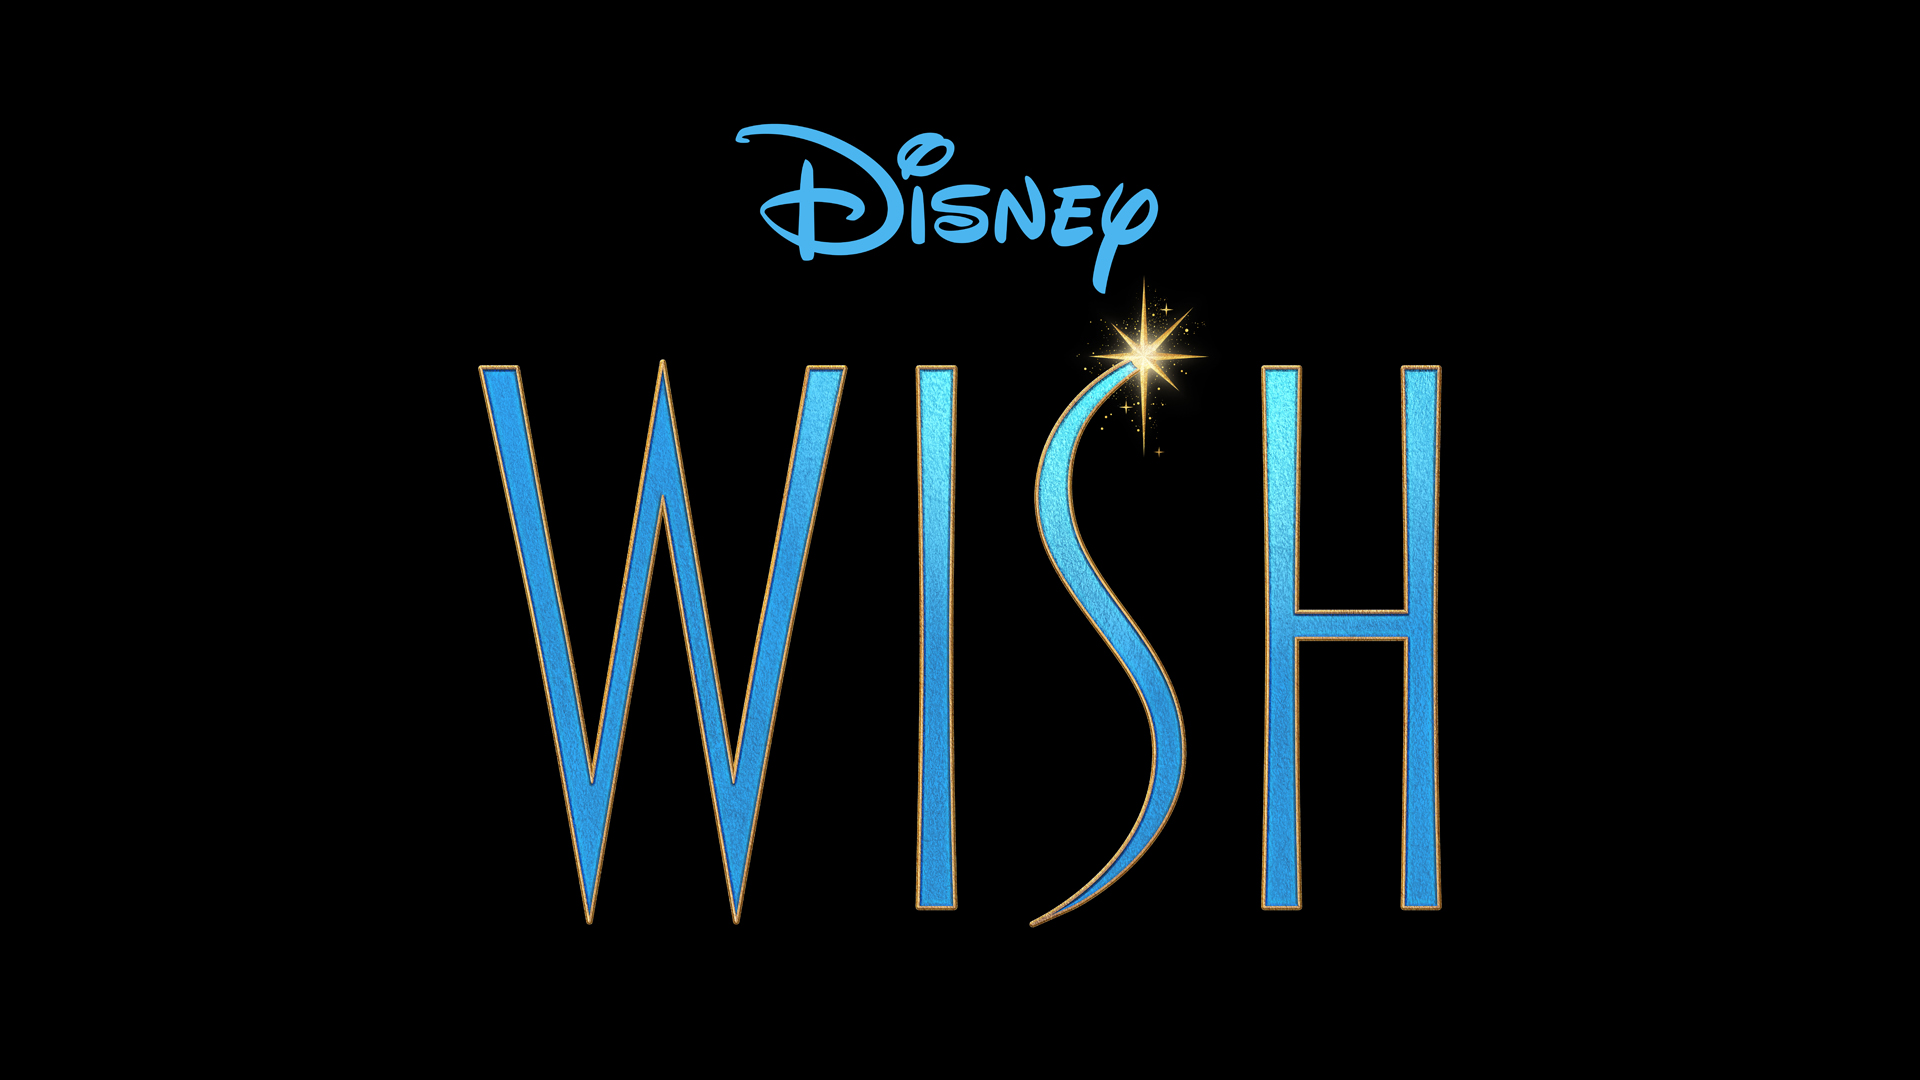 Disney Wish logo.jpg